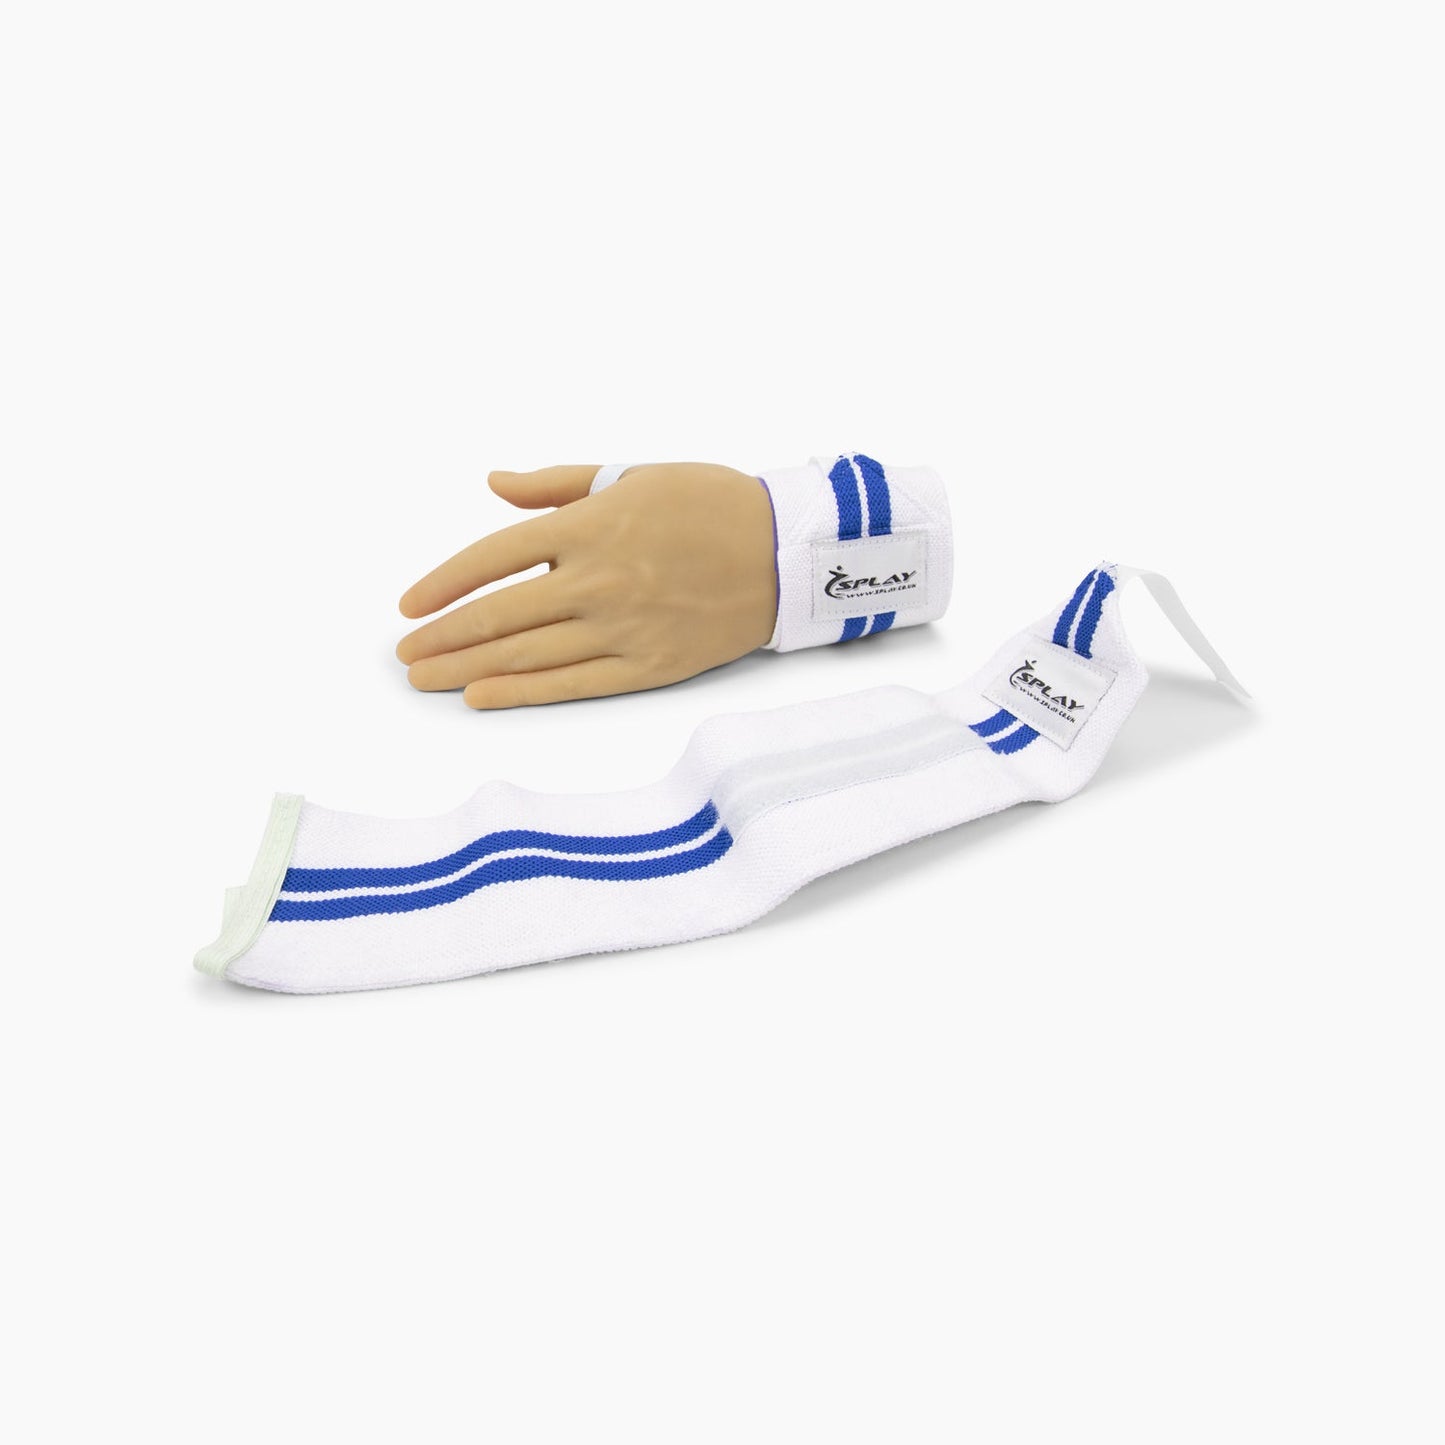 Buy Splay Wrist Wrap-Splay (UK) Limited-Blue-Splay UK Online